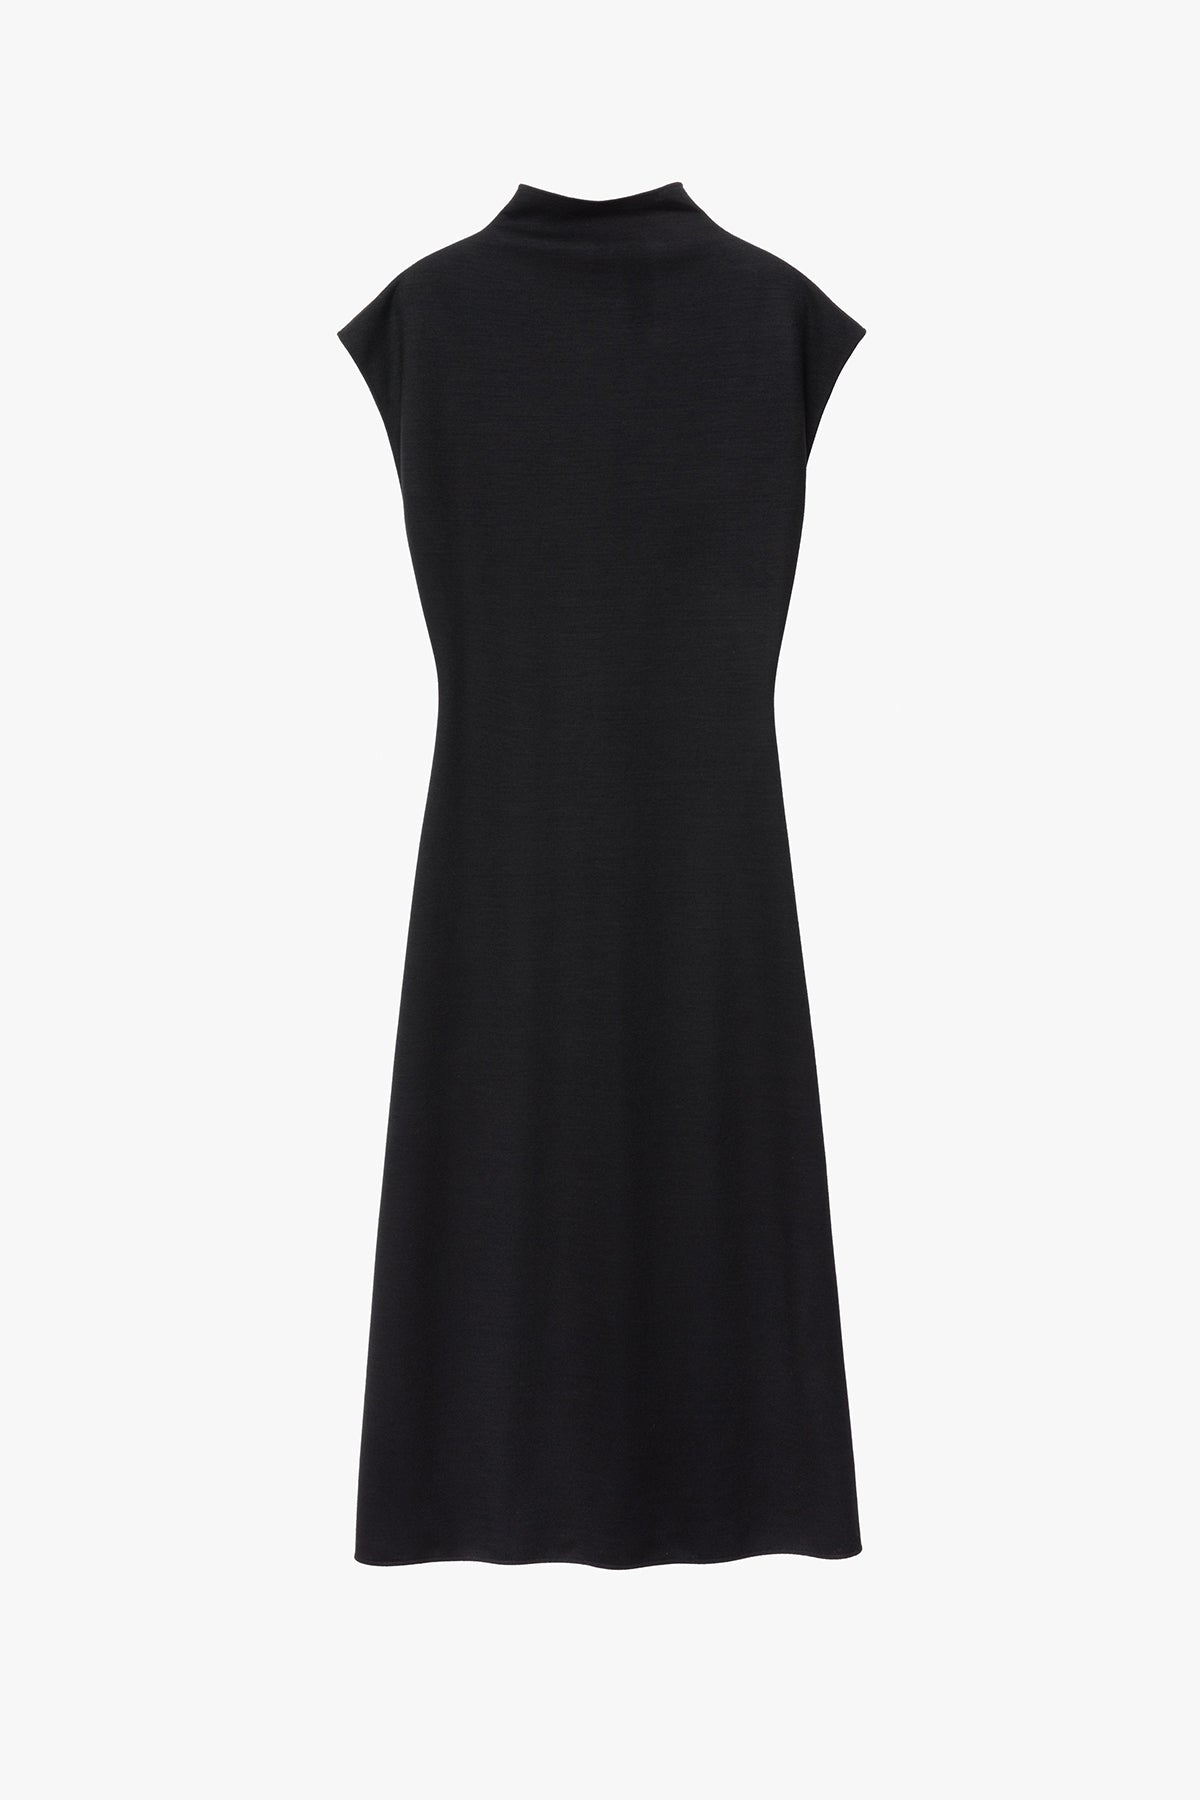 Black Wool Jersey Dress - GAUCHERE